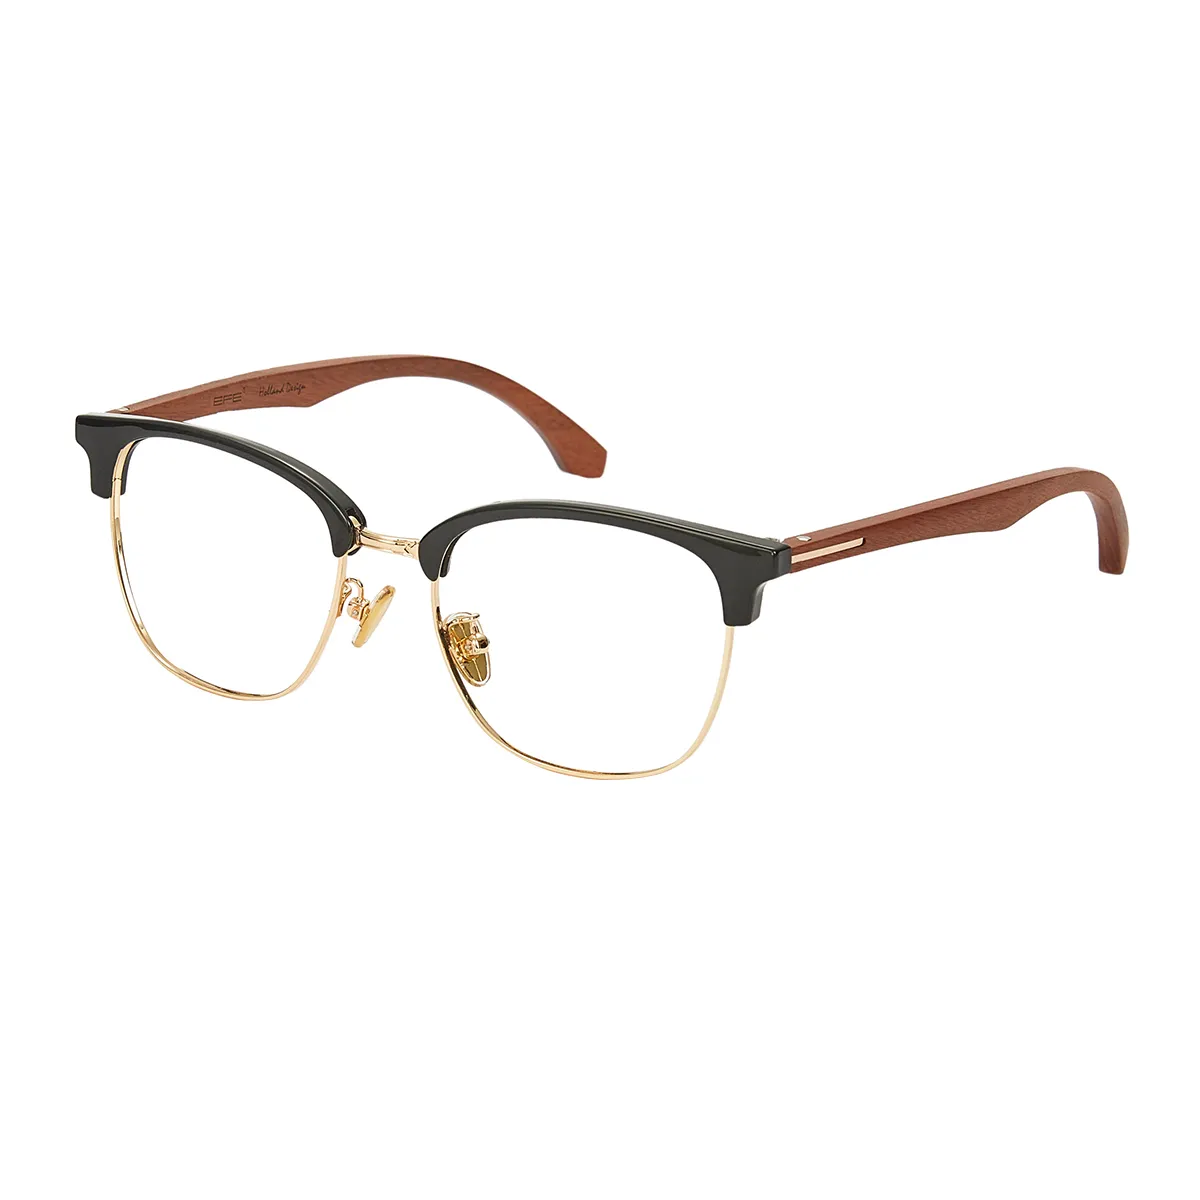 Bernal - Browline Black-Gold Glasses for Men